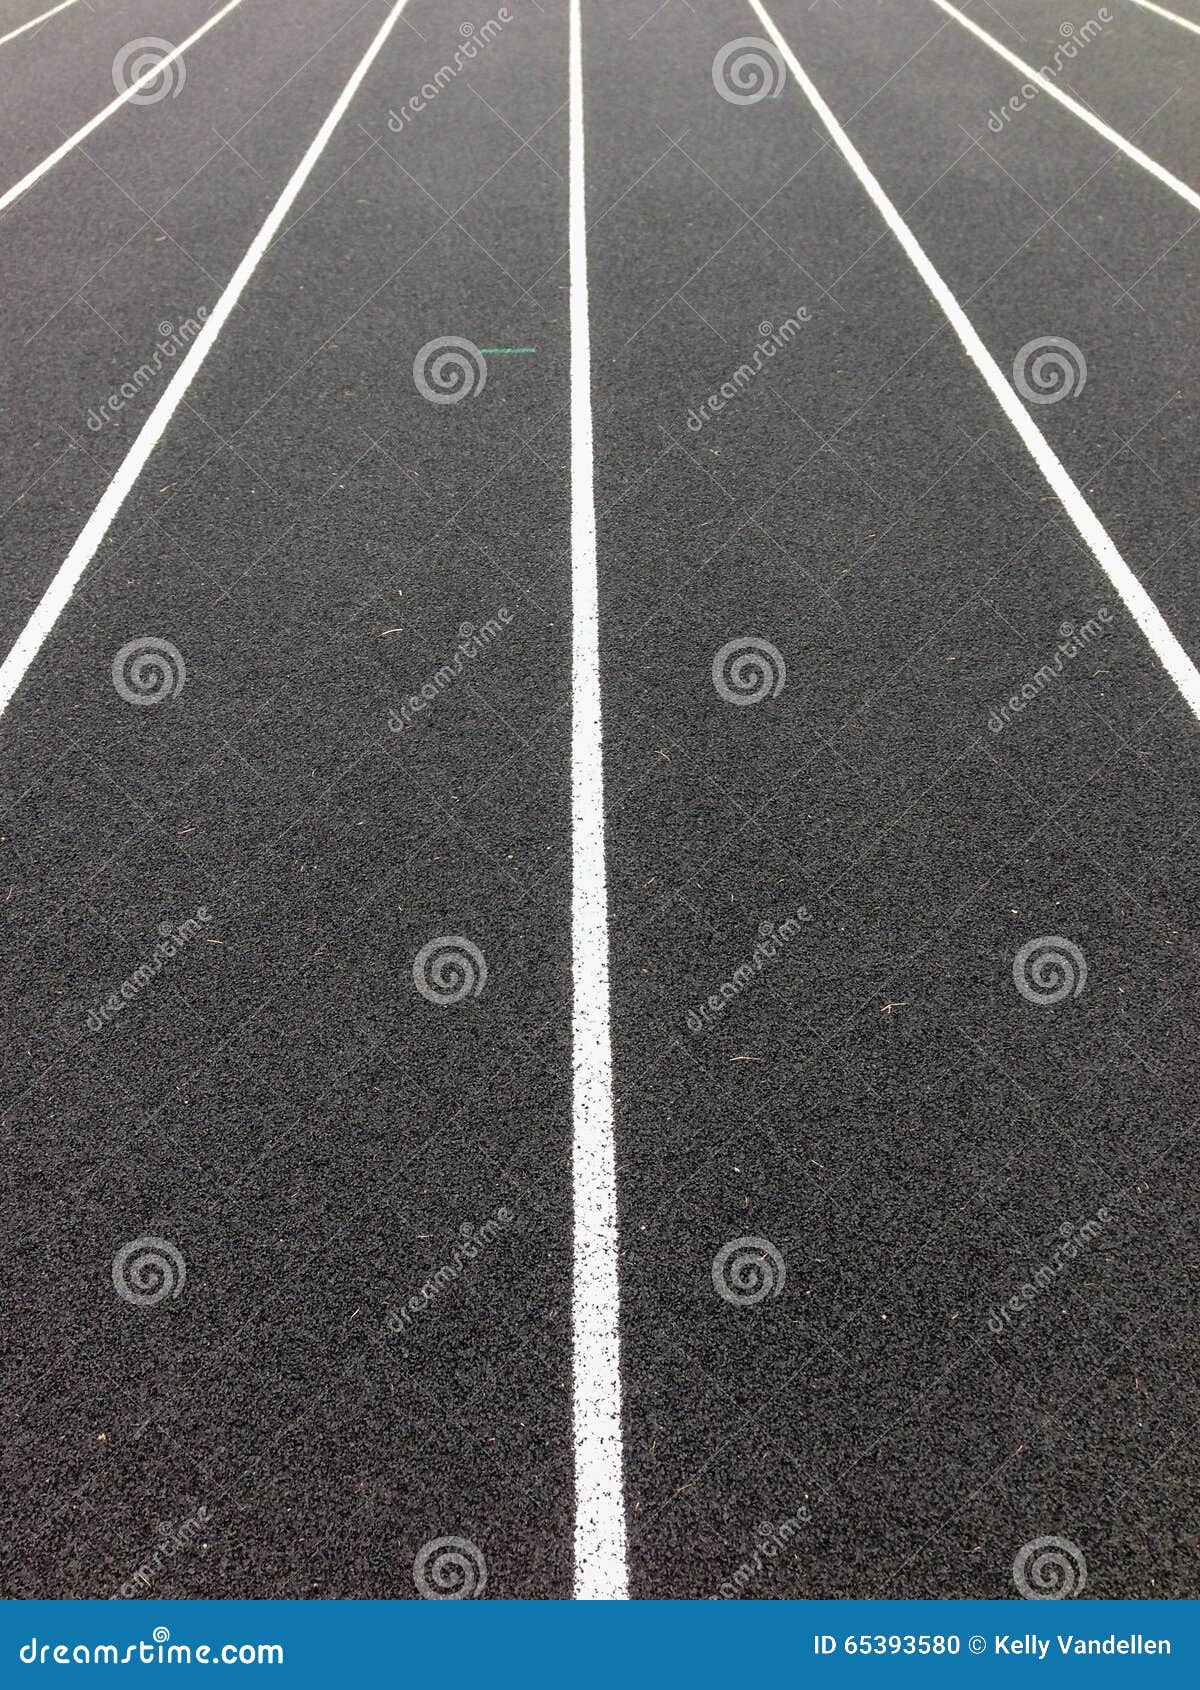 Black track centered on stripe background image